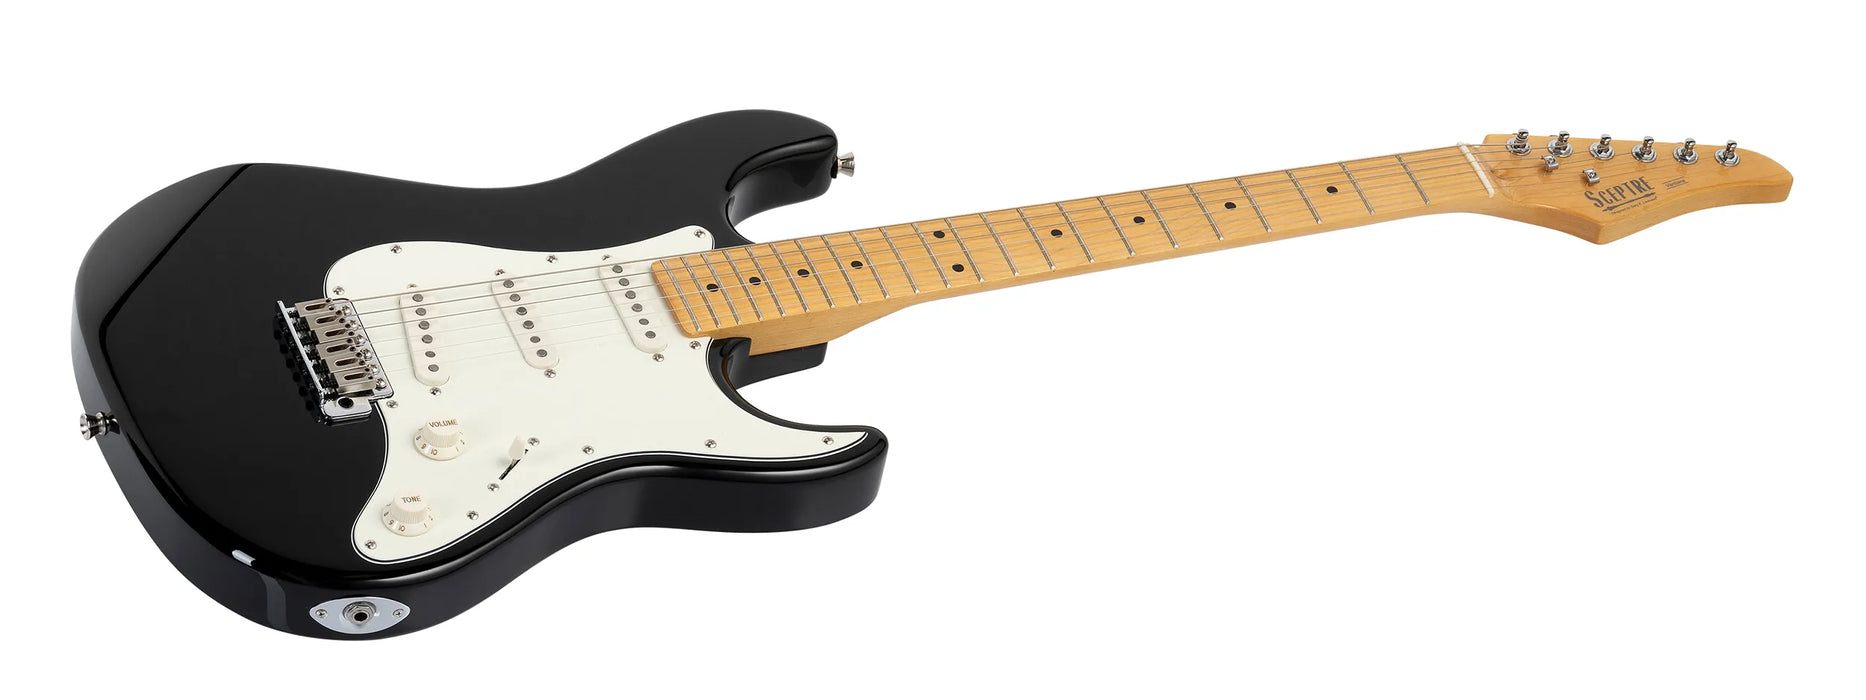 Sceptre Ventana Standard SV1 BK M Electric Guitar - Gloss Black *Setup Price